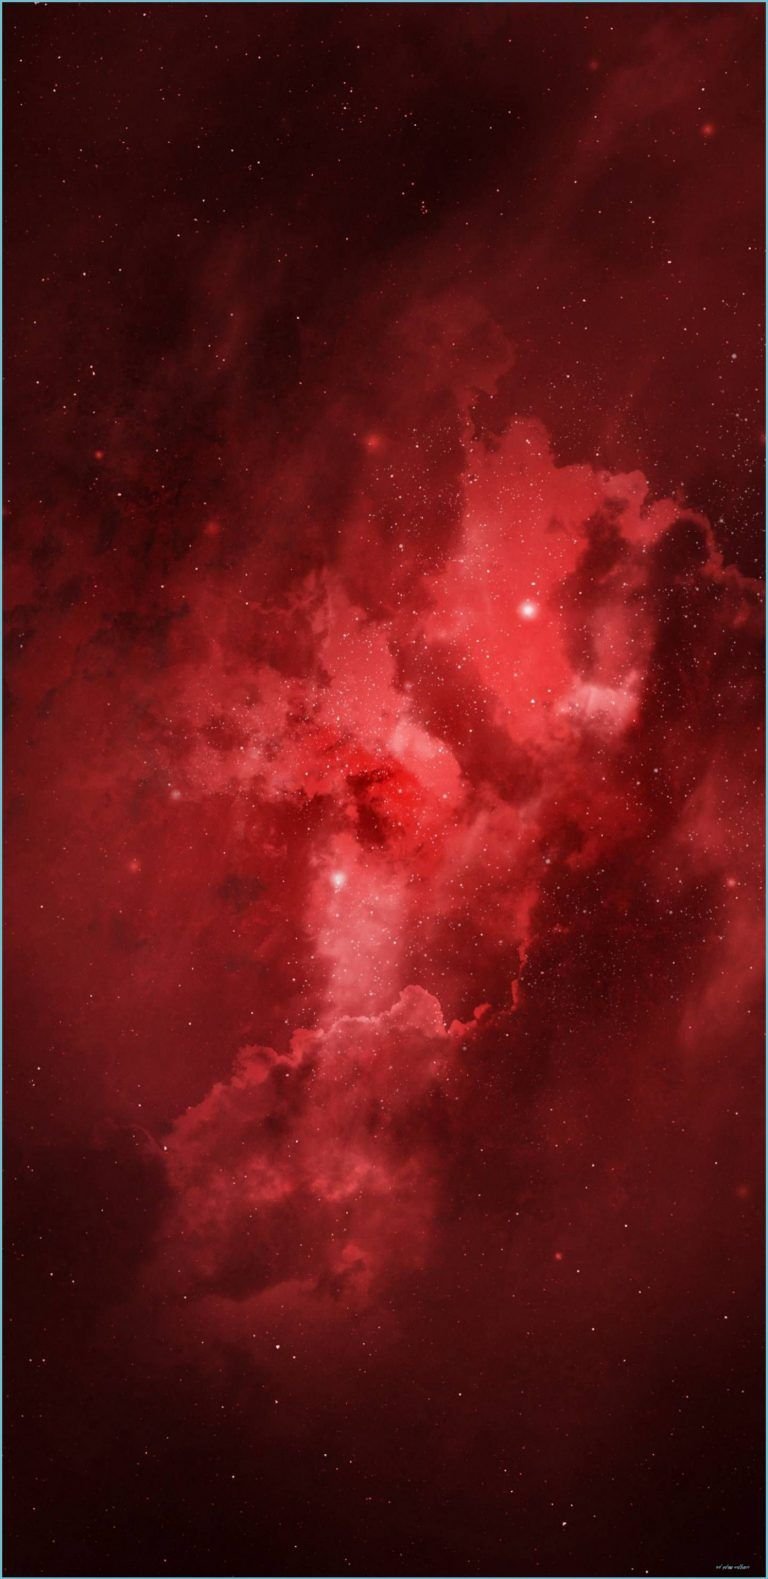 Red Nebula Galaxy IPhone Wallpaper Iphoneswallpapers Com  IPhone Wallpapers   iPhone Wallpapers